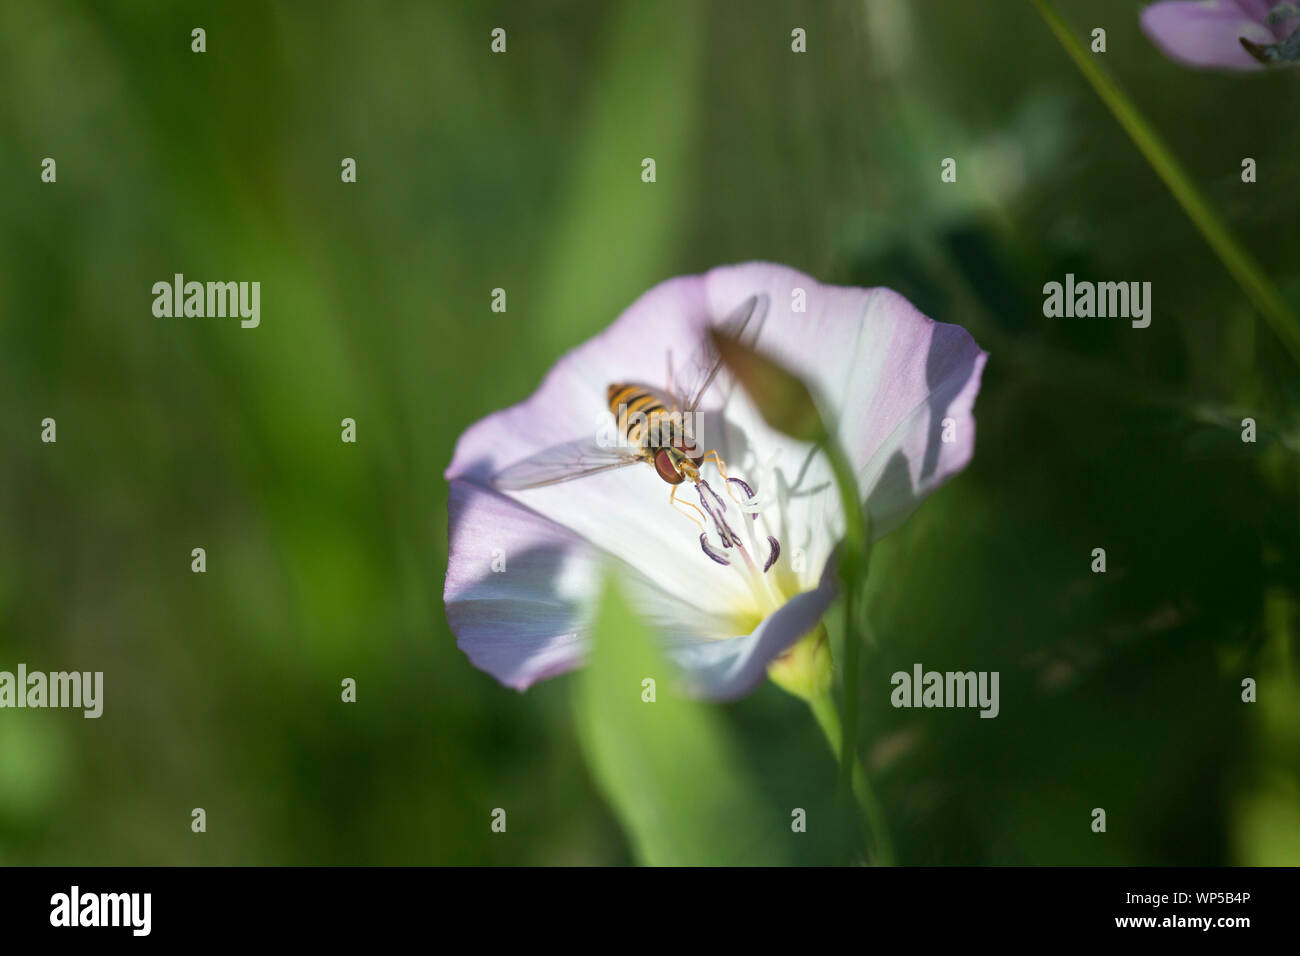 Marmalade fly on morning-glory flower Stock Photo